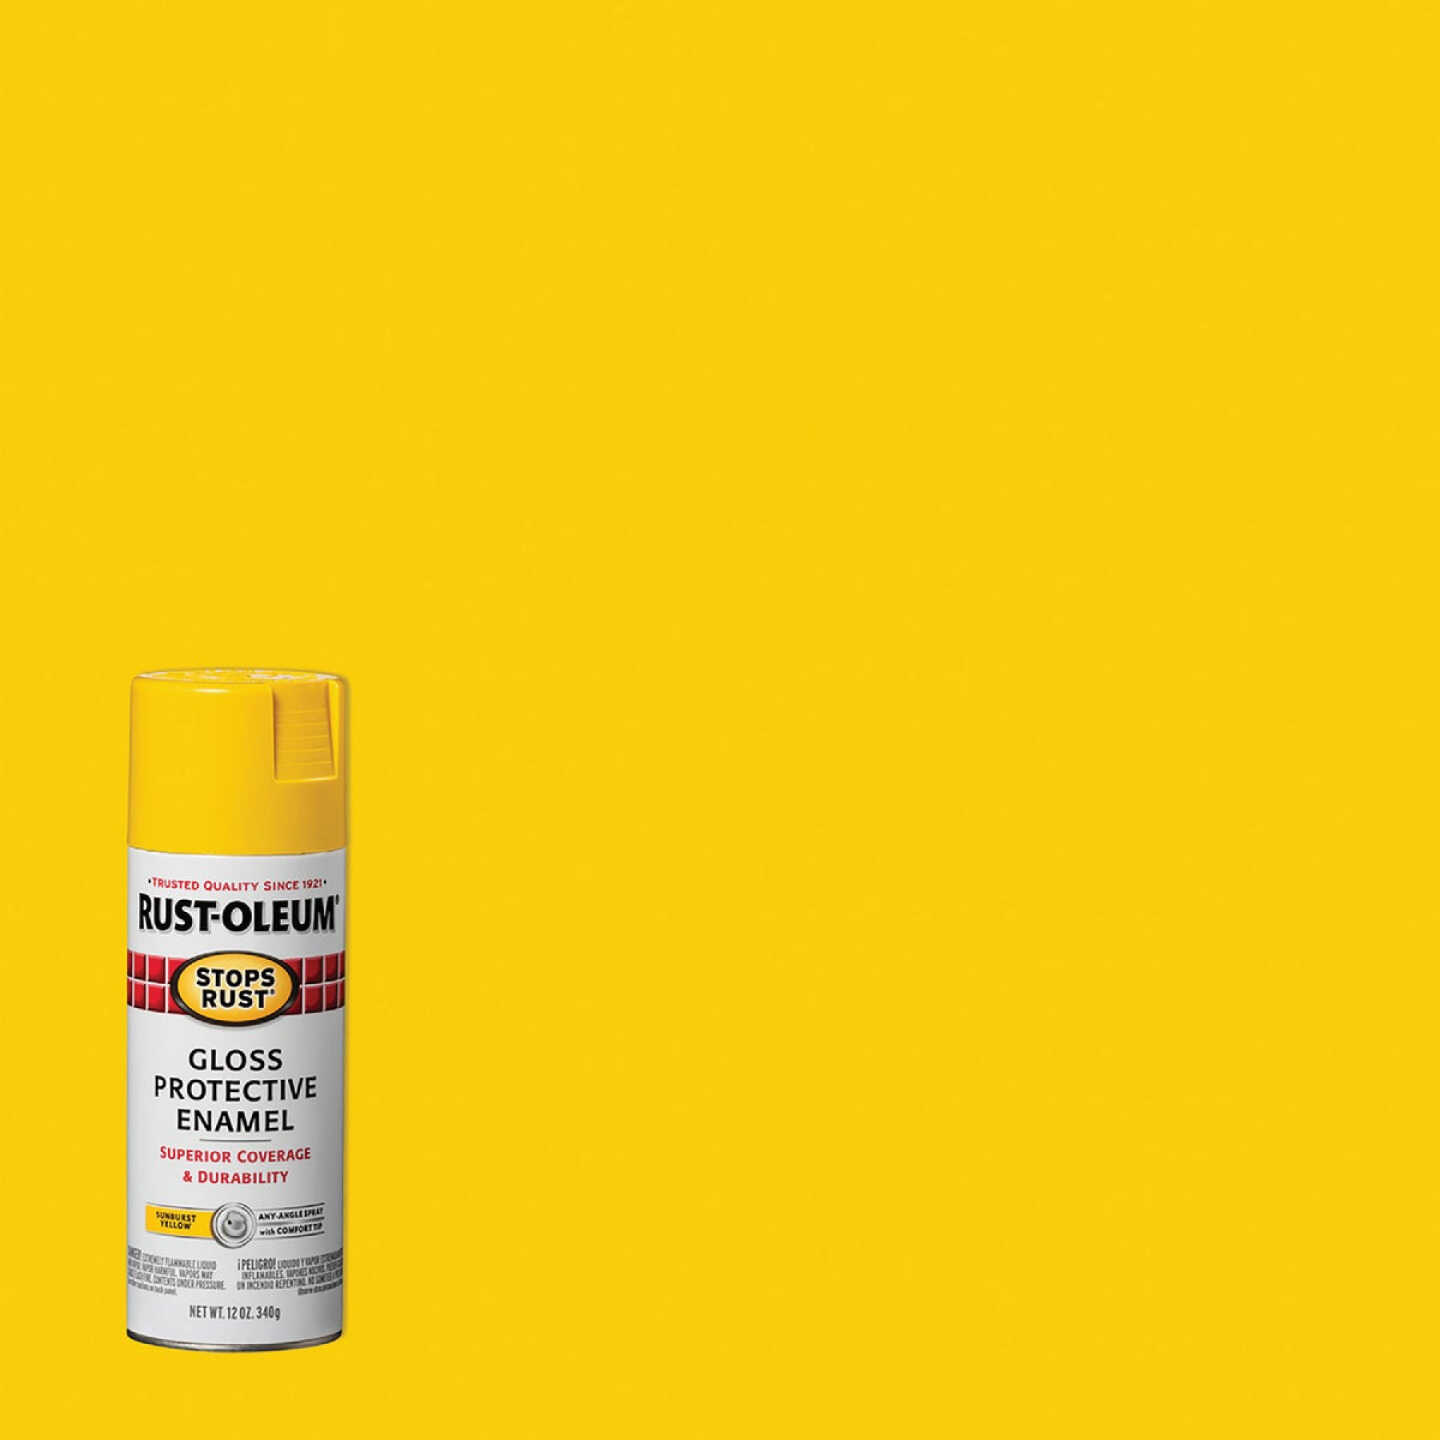 Rust-Oleum Stops Rust 12 oz. Protective Enamel Satin Black Spray Paint  7777830 - The Home Depot